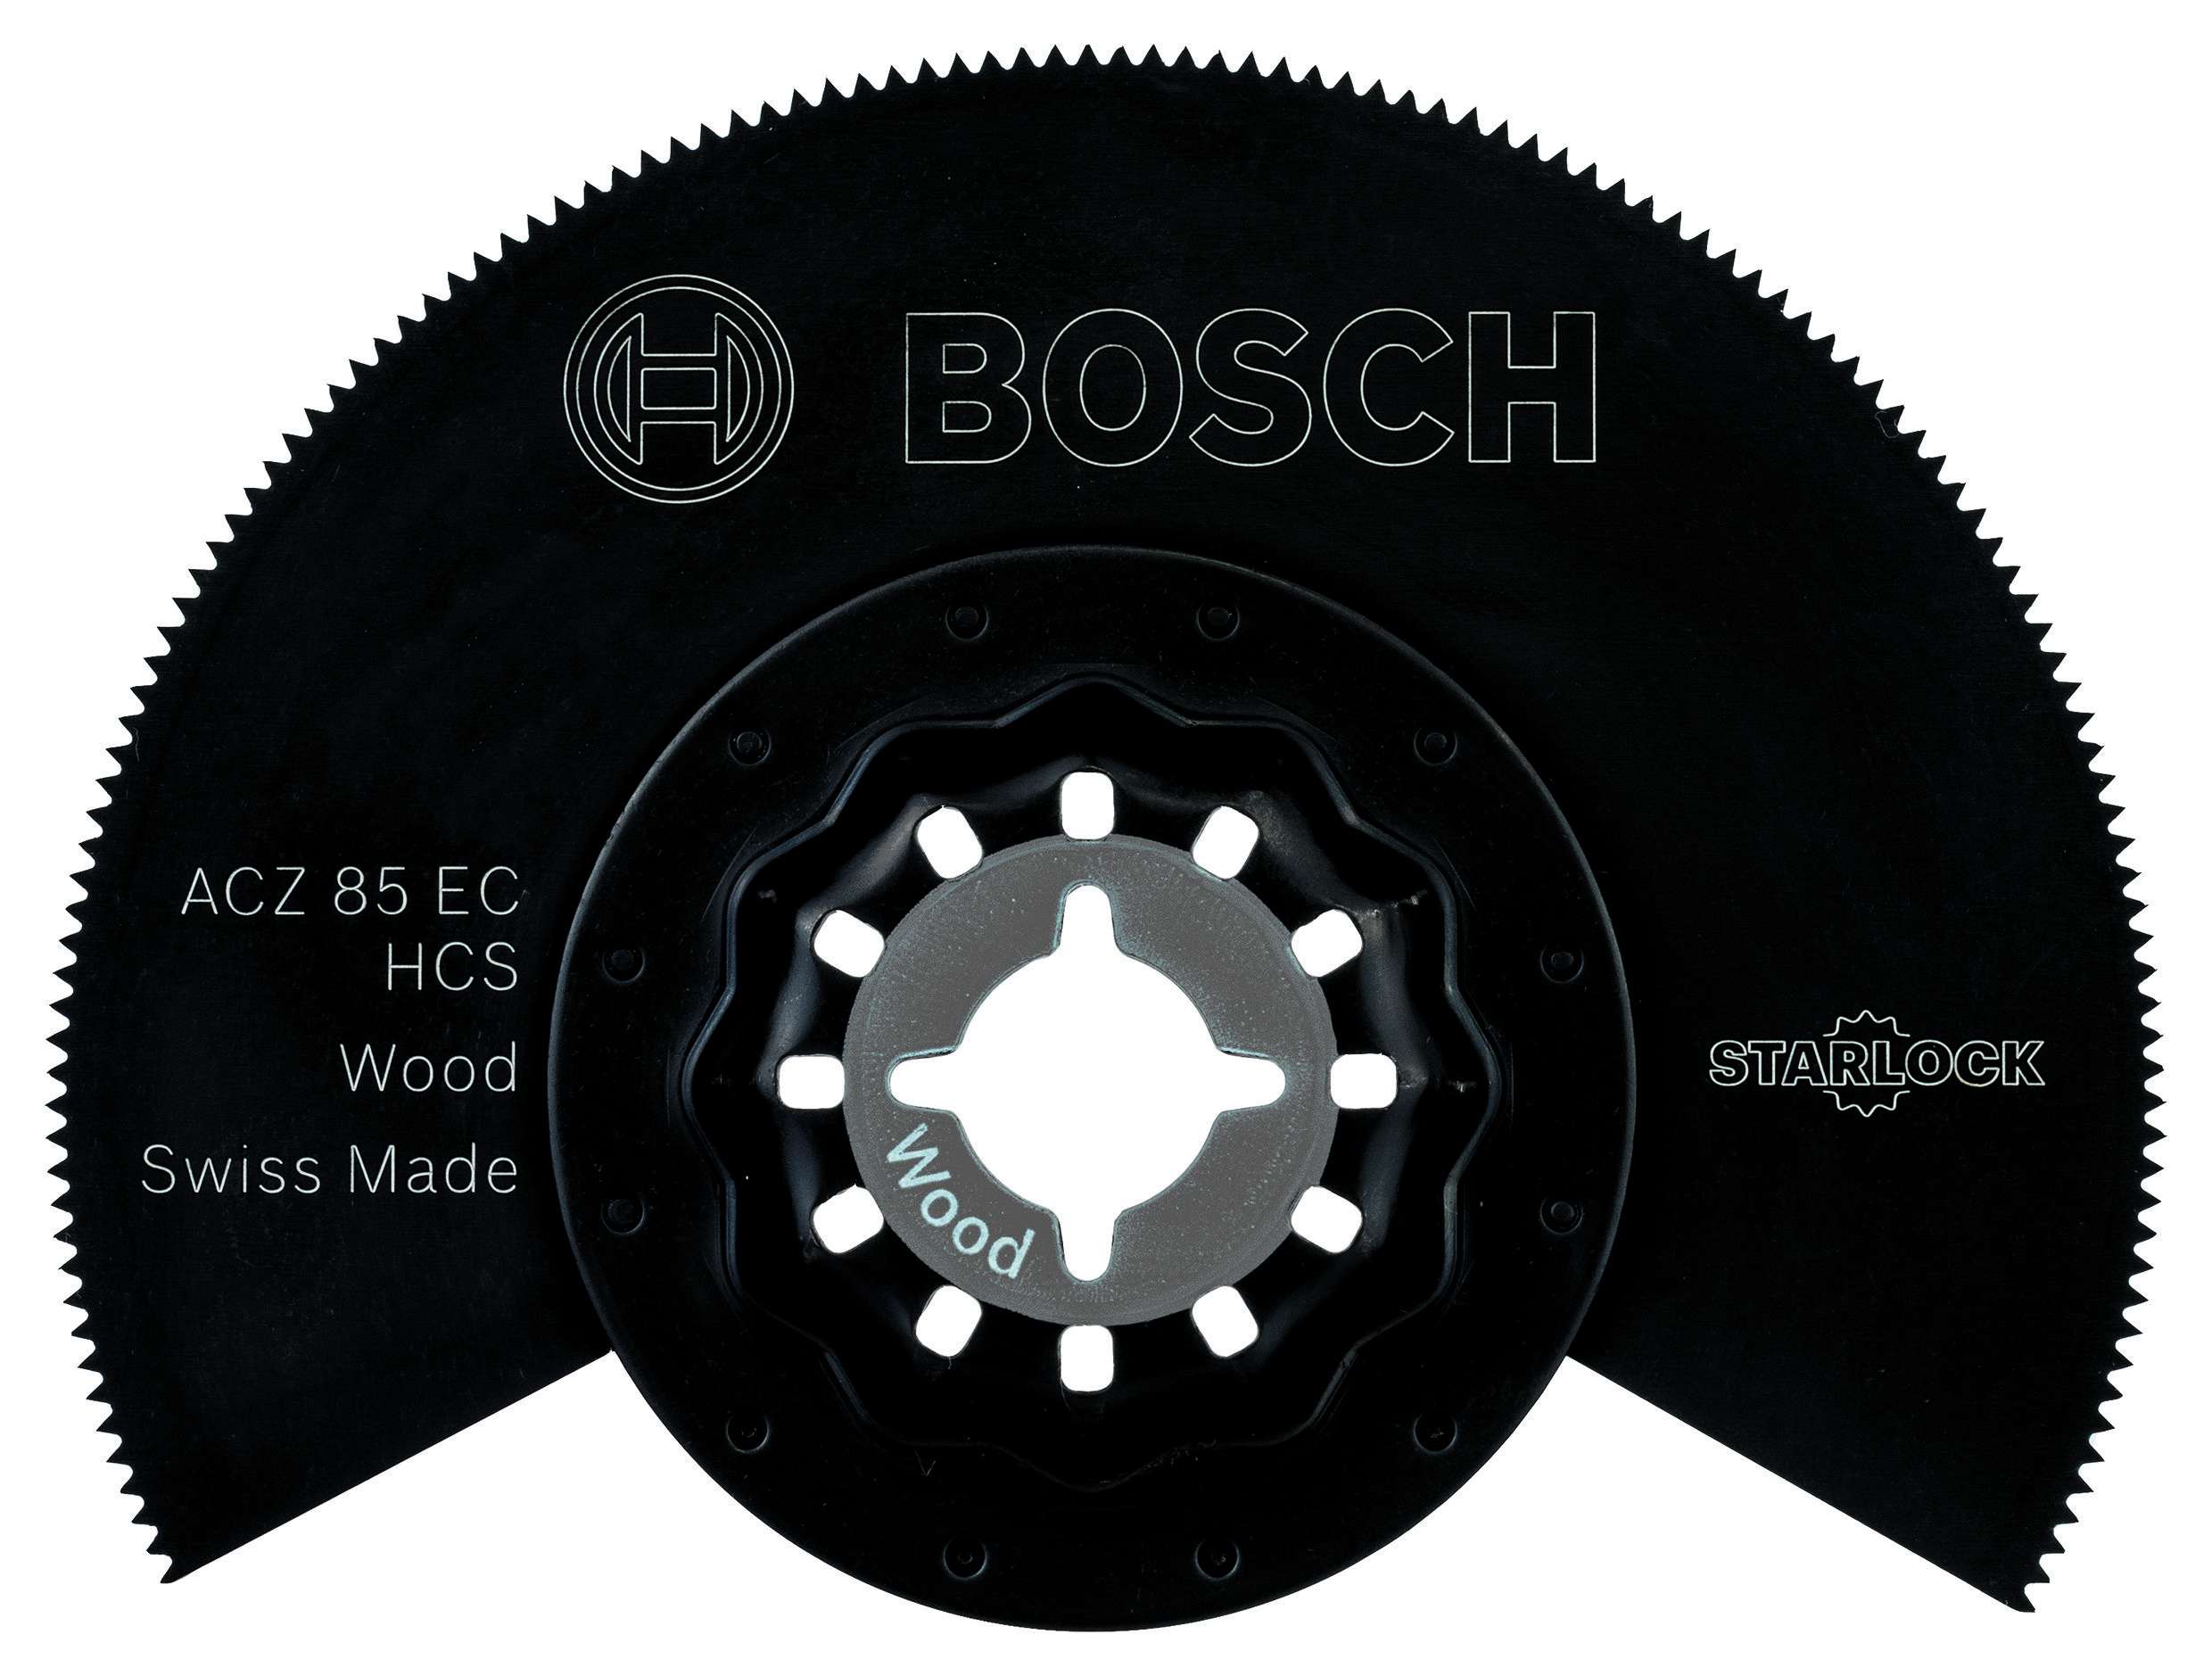 Bosch - Starlock - ACZ 85 EC - HCS Ahşap İçin Segman Testere Bıçağı, Bombeli 10'lu